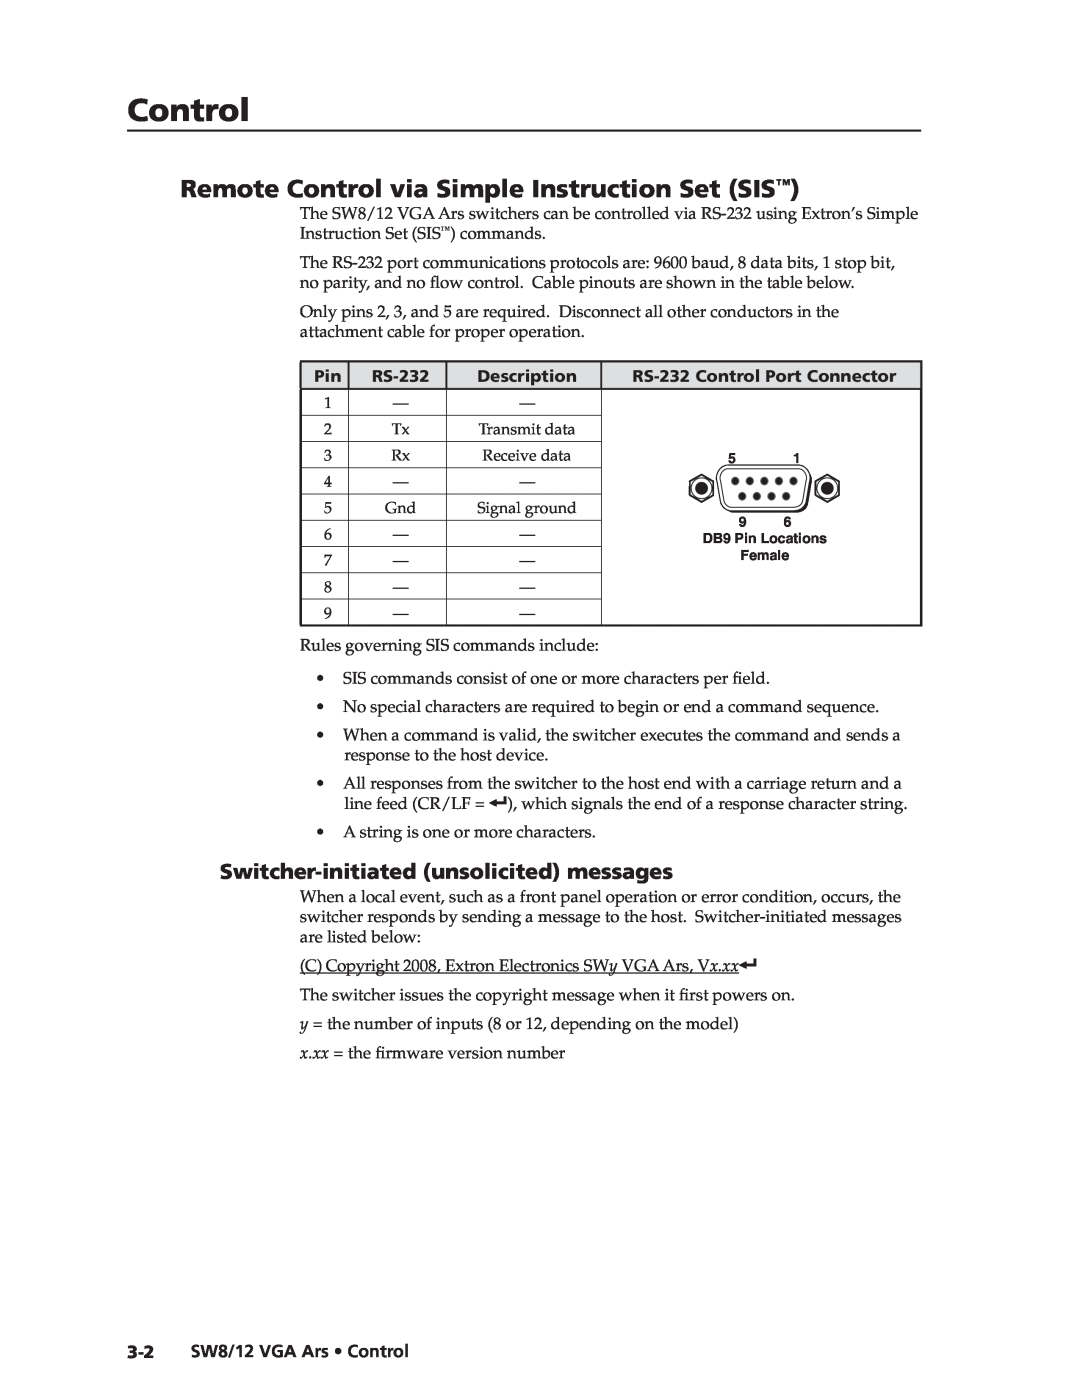 Extron electronic SW8 VGA Ars, SW12 VGA ARS Remote Control via Simple Instruction Set SIS\⤀, Pin RS-232, Description 